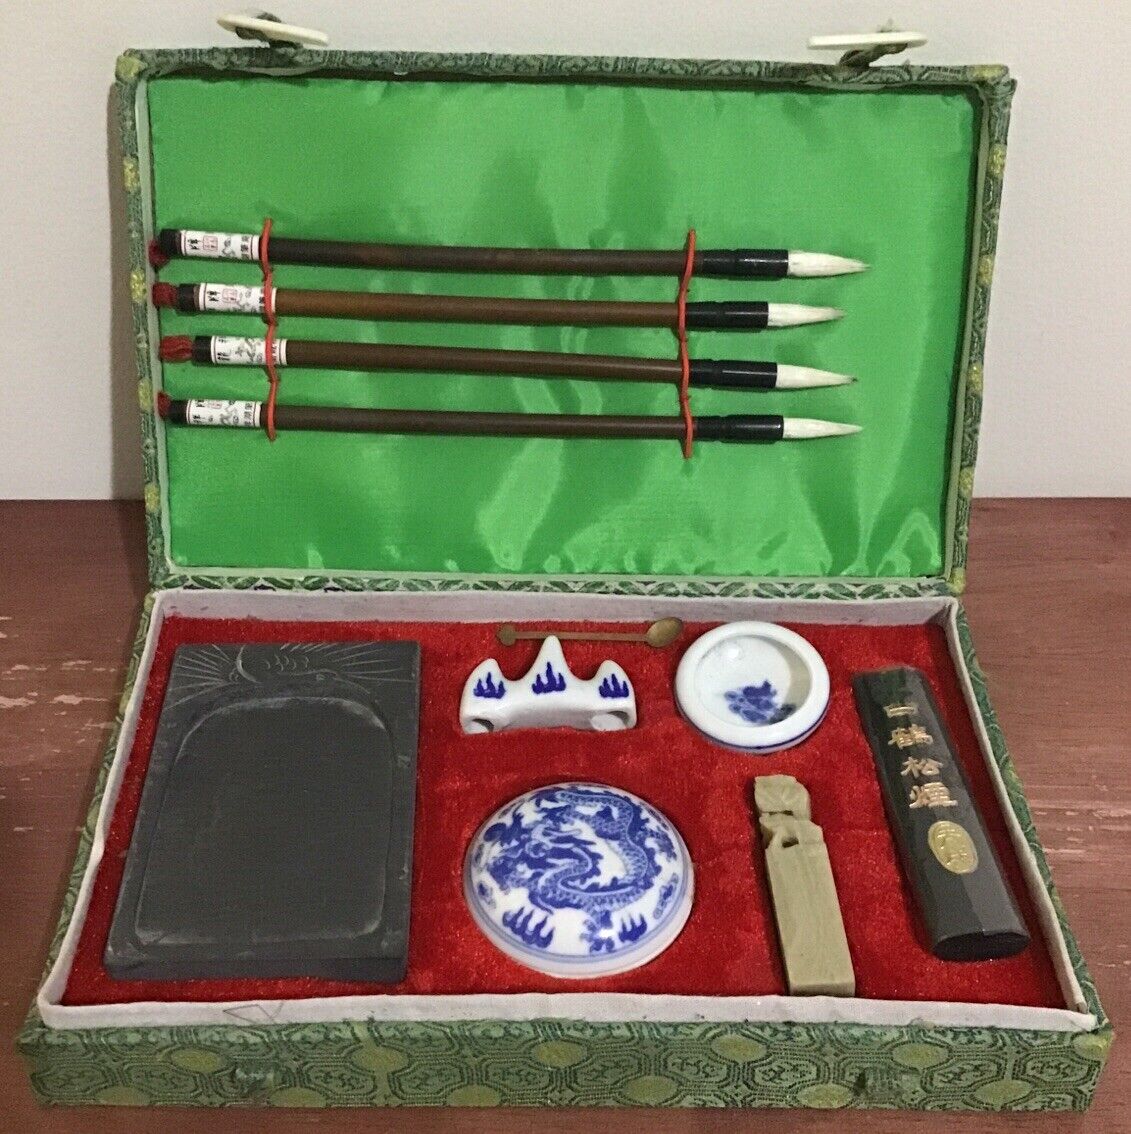 Vintage Oriental Artistic Calligraphy Set - 3 Brush Pens, Seal, Ink, More